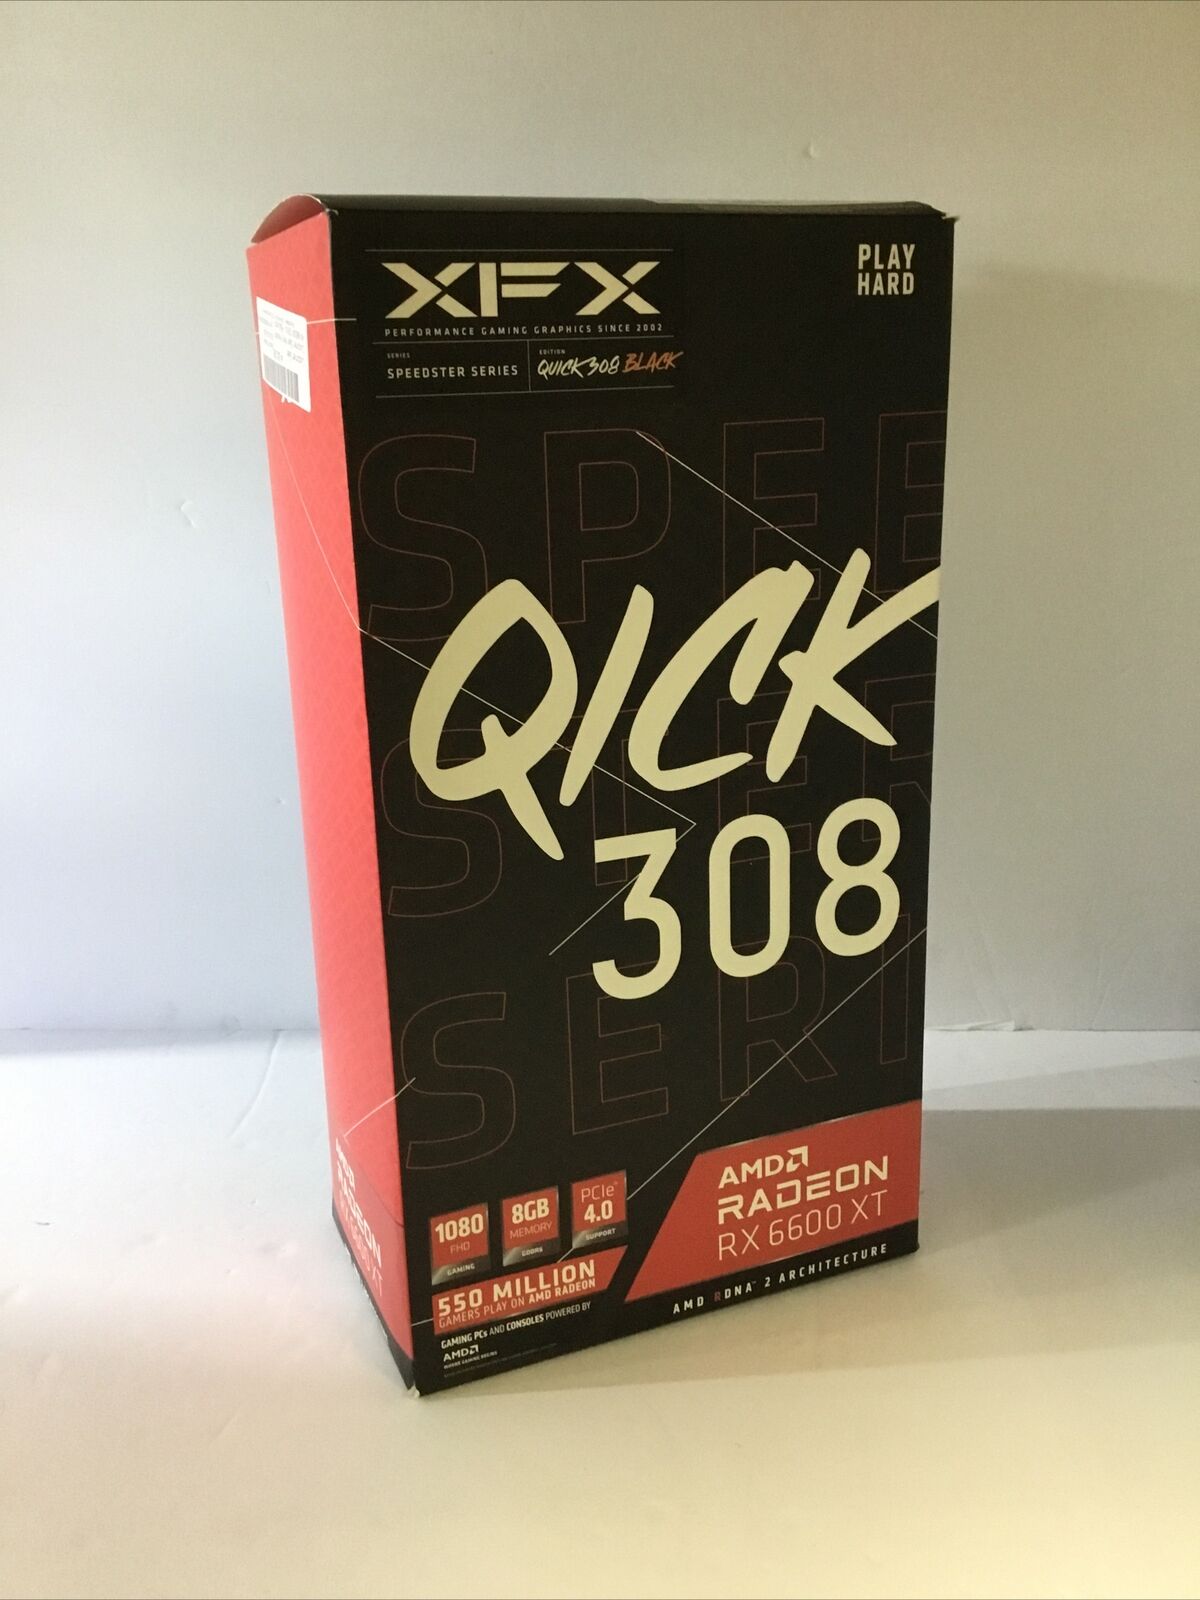 XFX Speedster QICK 308 AMD Radeon RX 6600 XT Black GDDR6 8GB Graphics Card